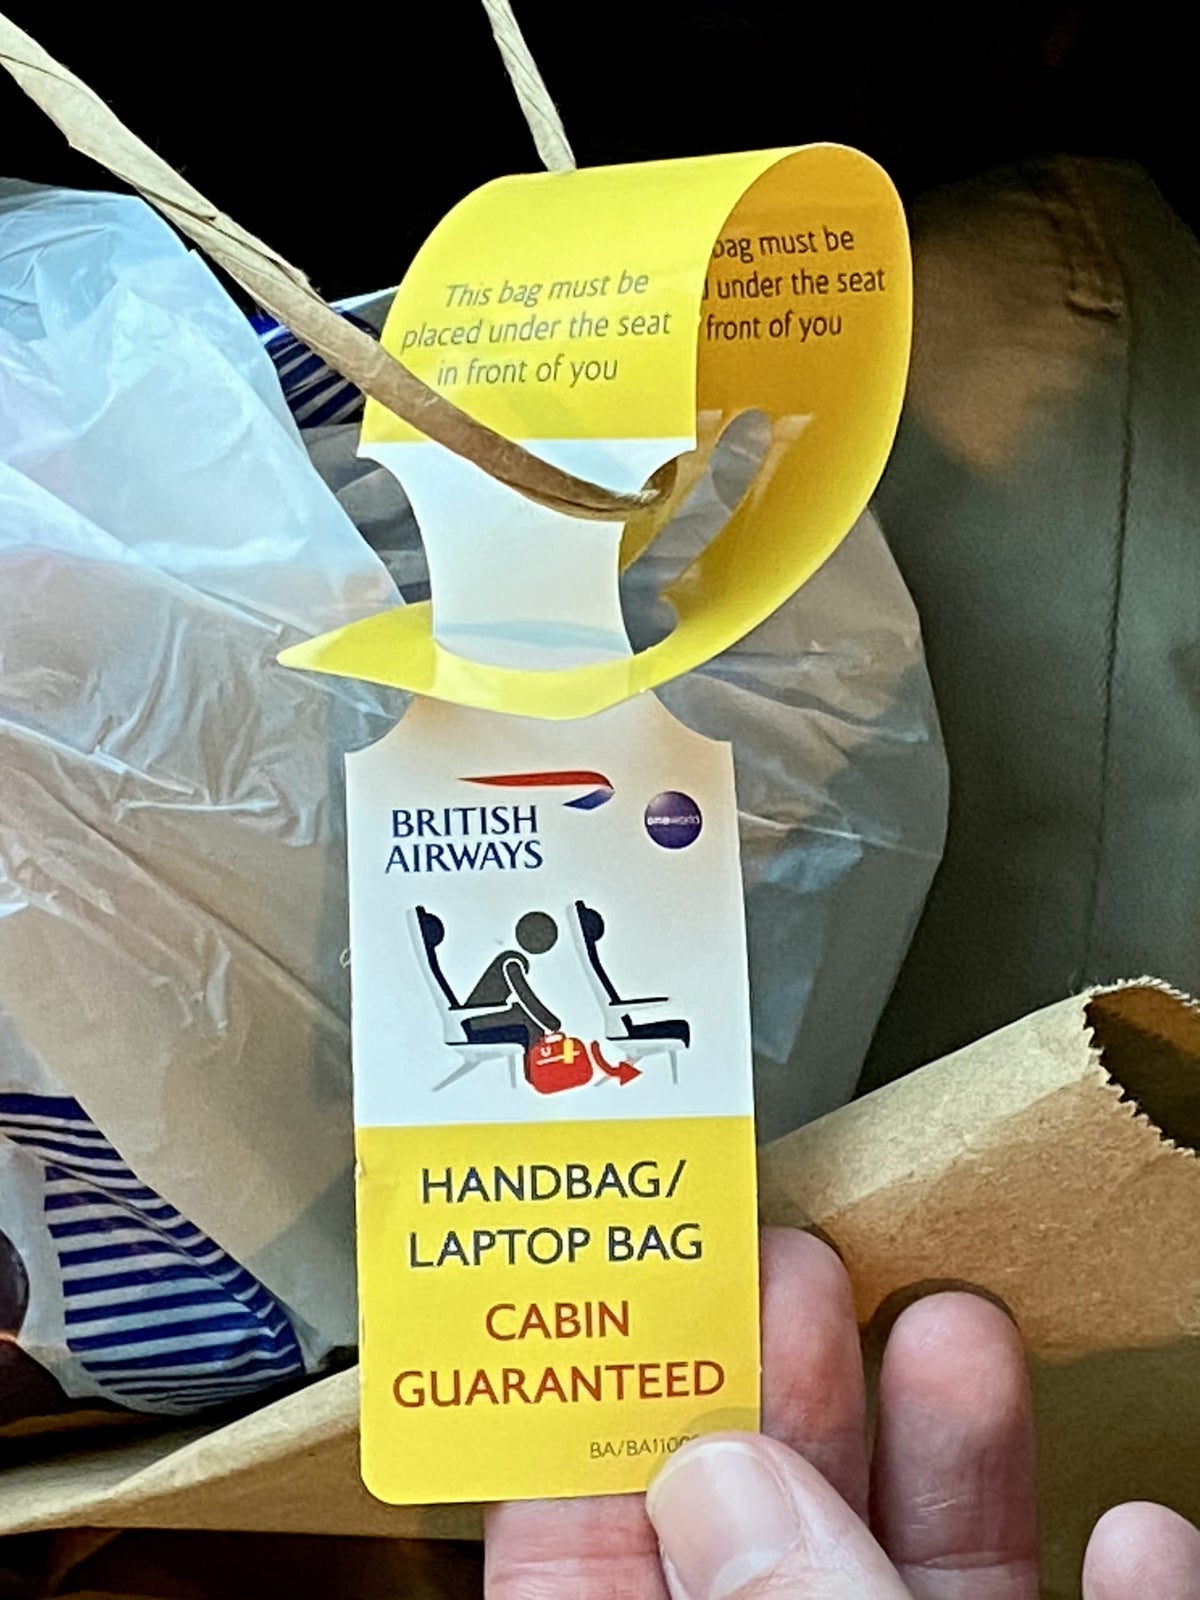 British Airways Club Europe A321neo cabin bag guaranteed